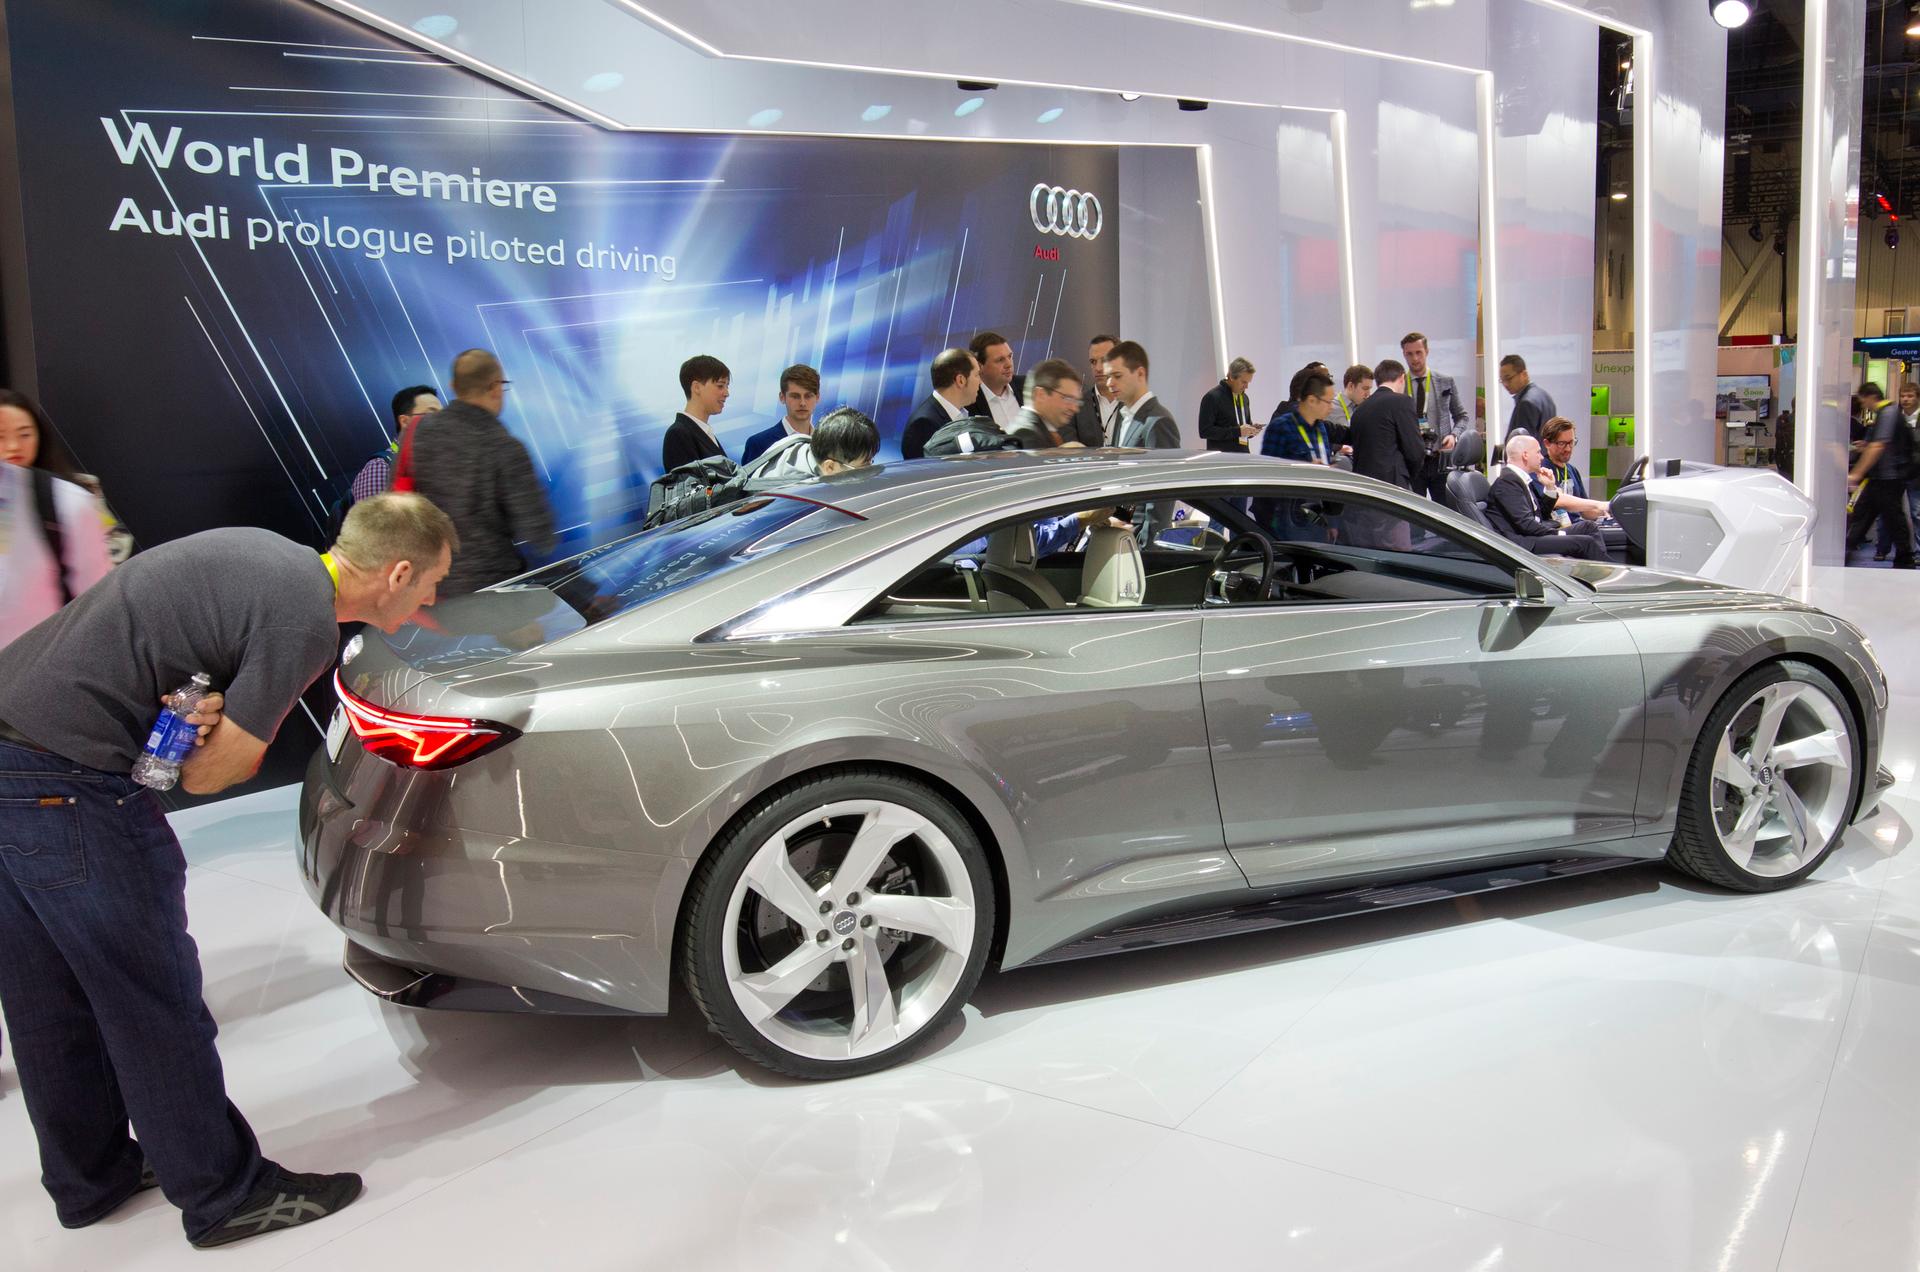 The Audi Prologue concept car